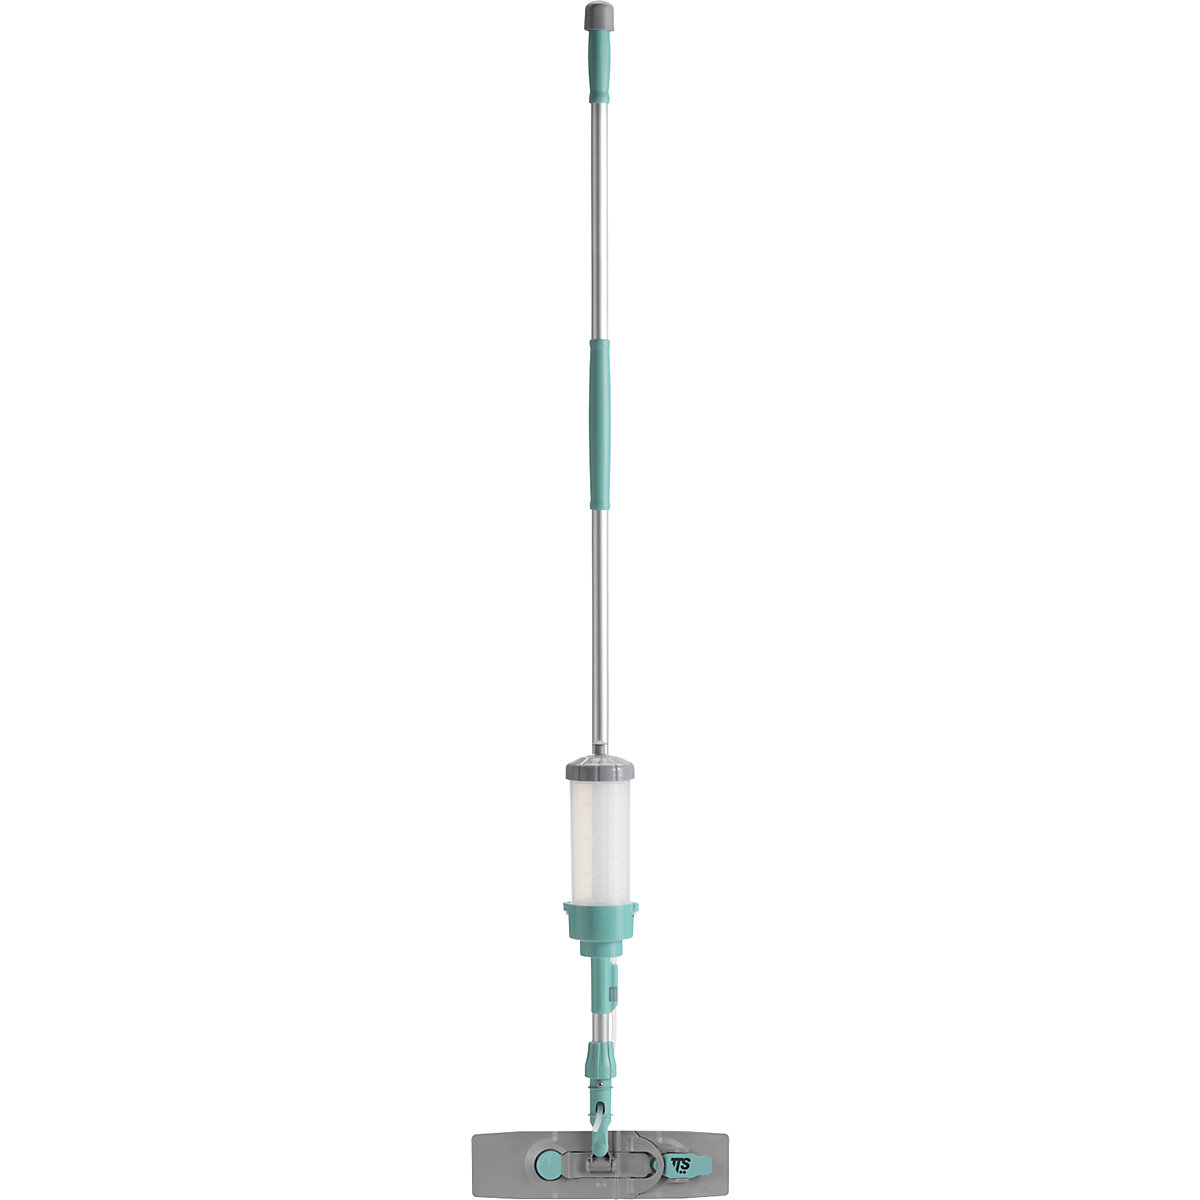 ECO! spray mop system – Kärcher